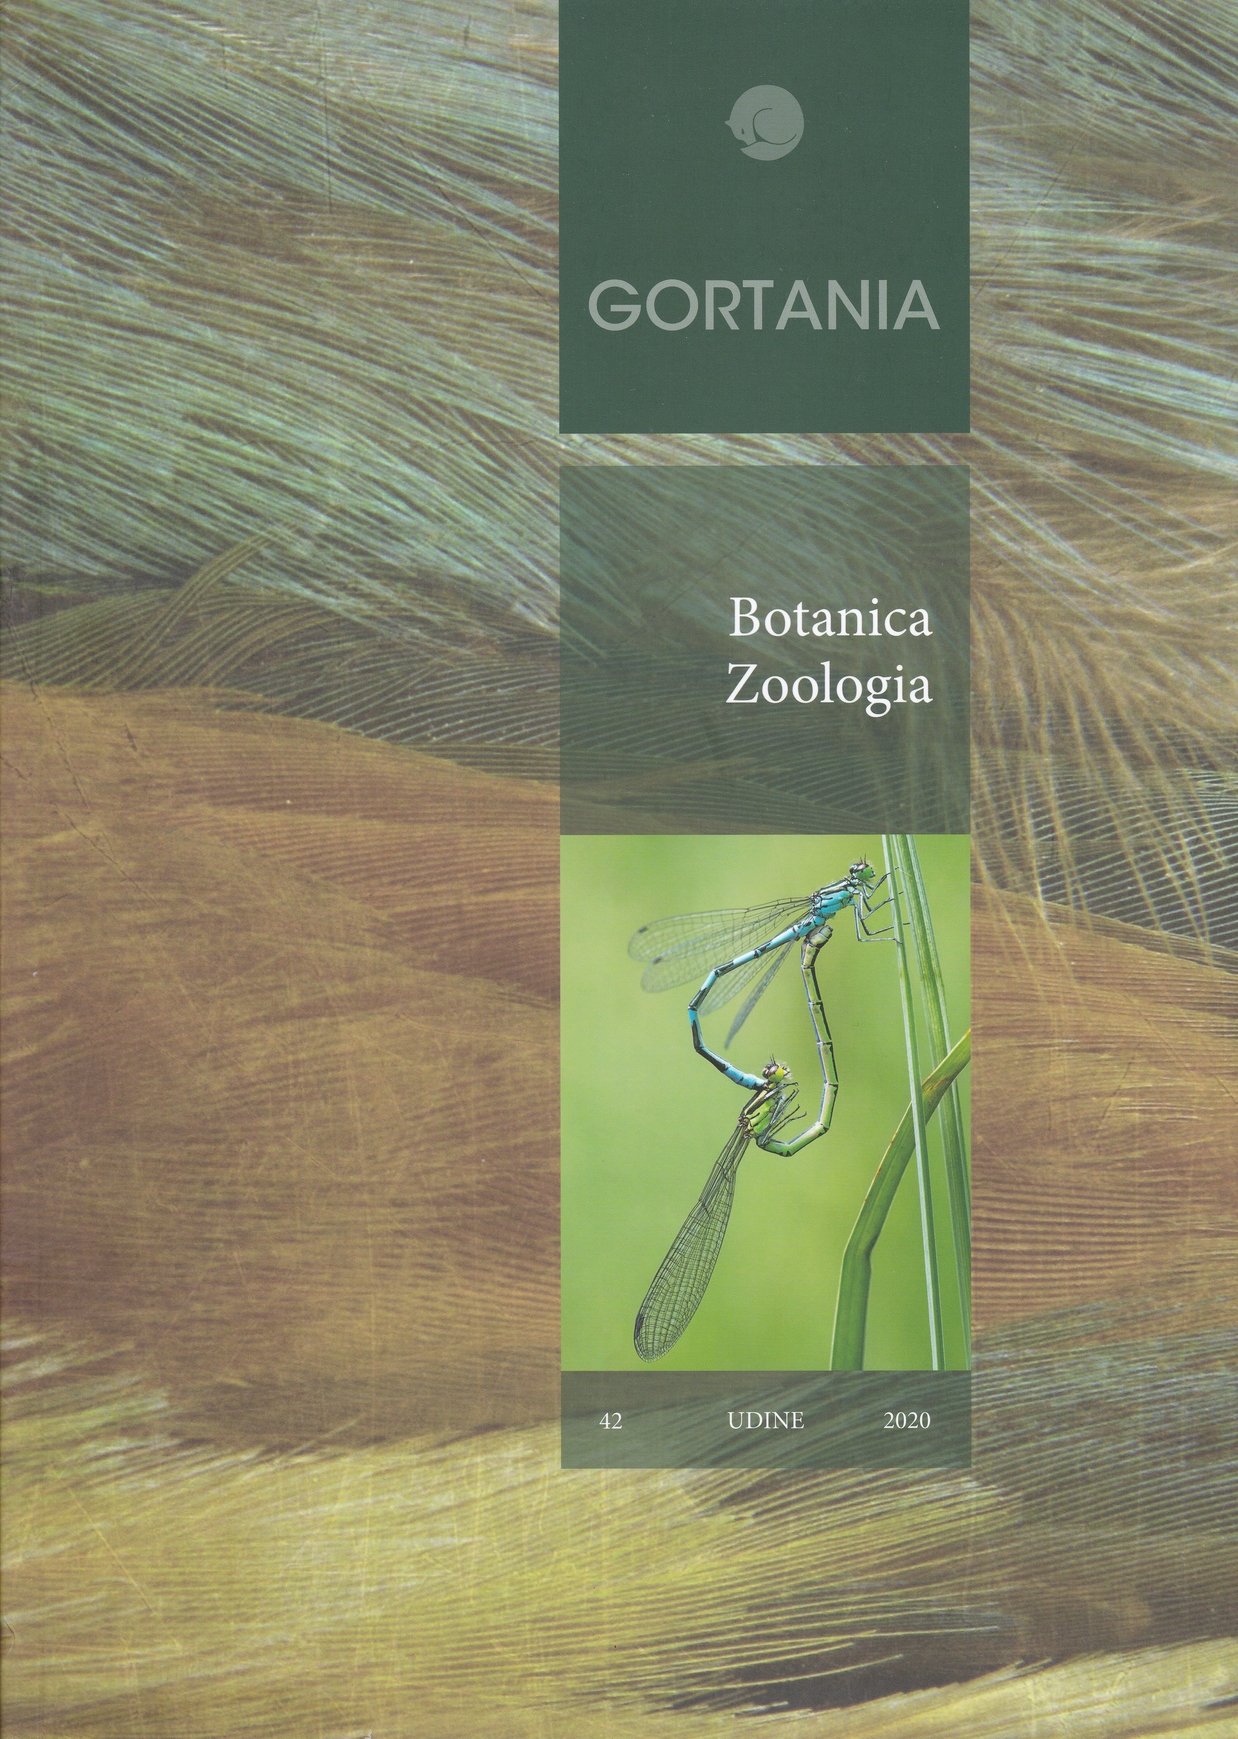 Gortania. Atti del Museo Friulano di Storia Naturale. Botanica, Zoologia 2020/42. (Rippl-Rónai Múzeum CC BY-NC-ND)